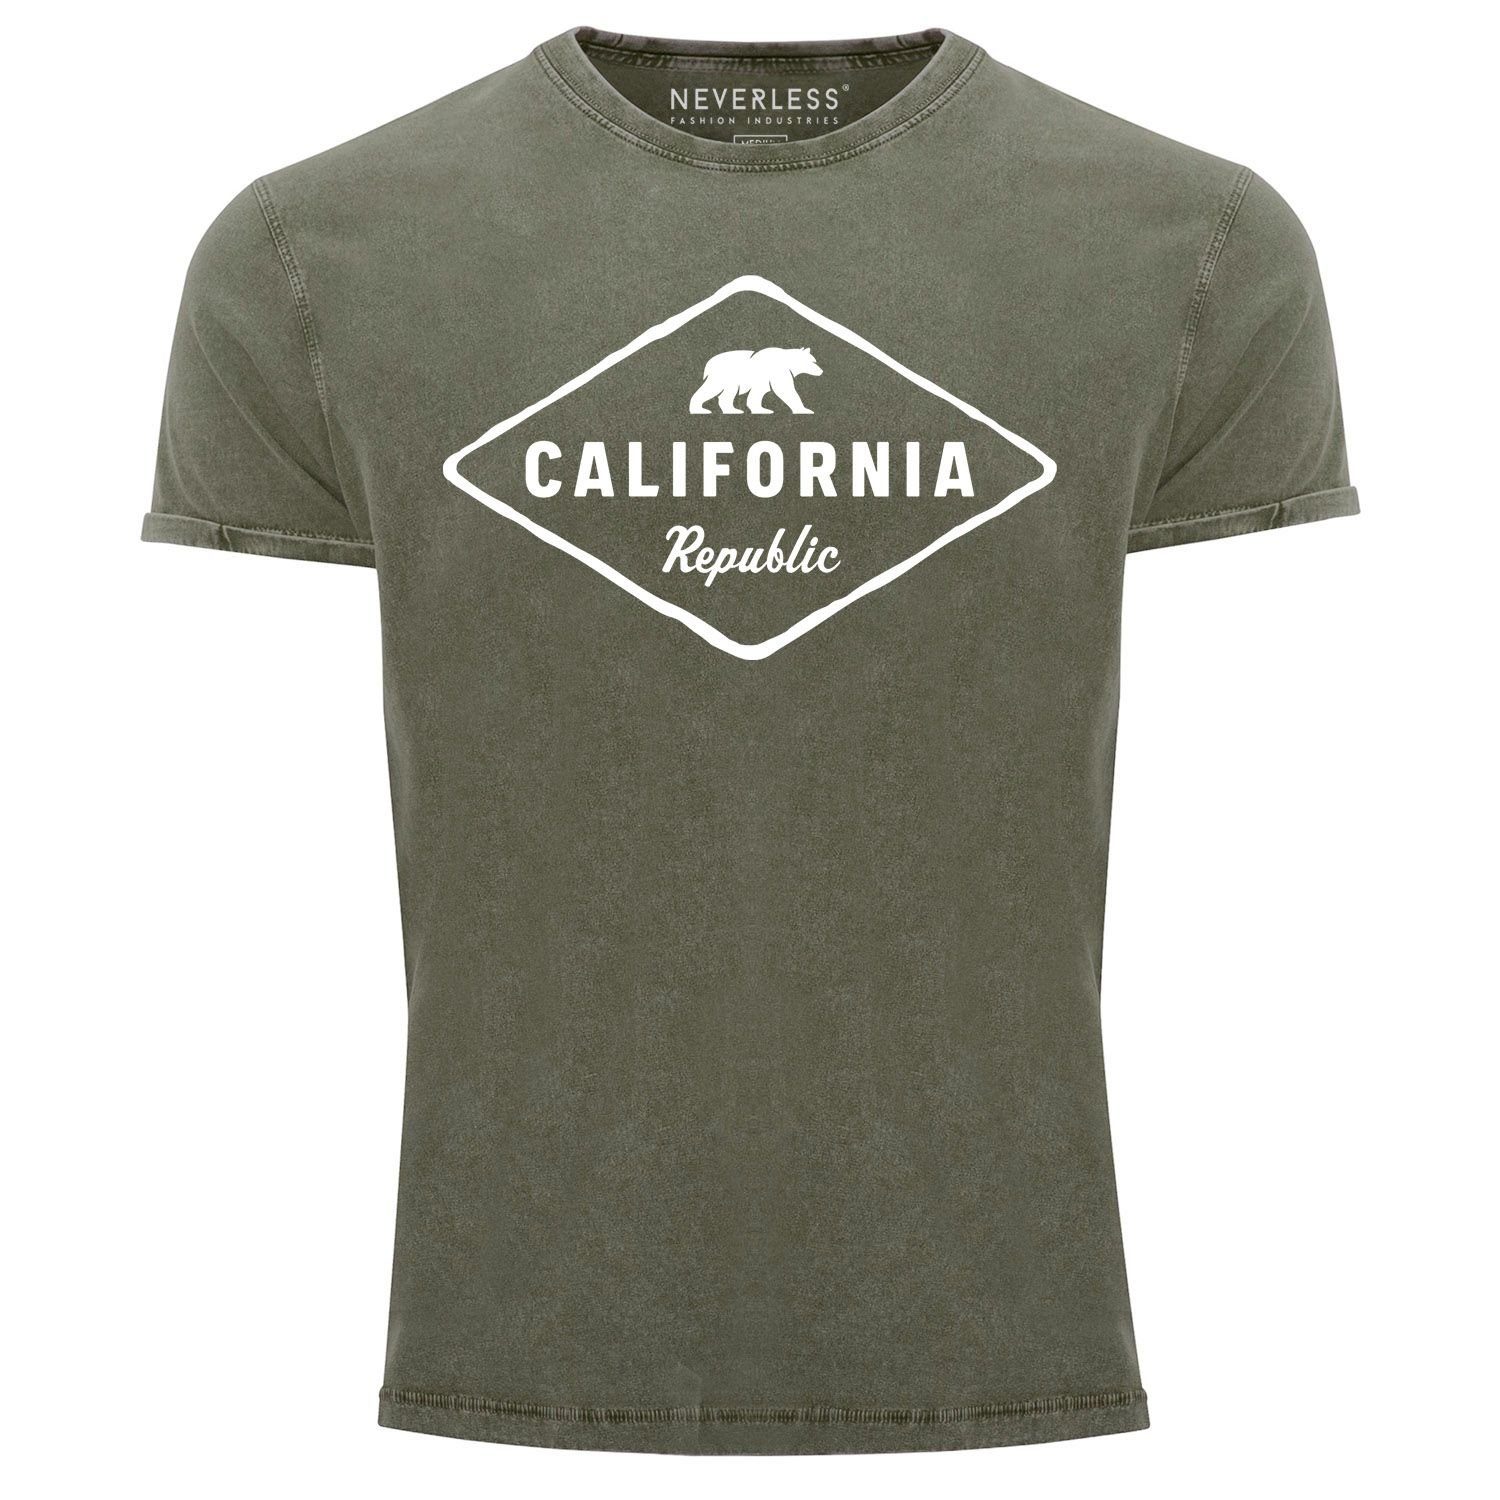 [Elegant] Neverless Print-Shirt Herren Printshirt Shirt mit Print Vintage Bär USA Sunshine Neverless® California Aufdruck Bear Badge Republic T-Shirt oliv State